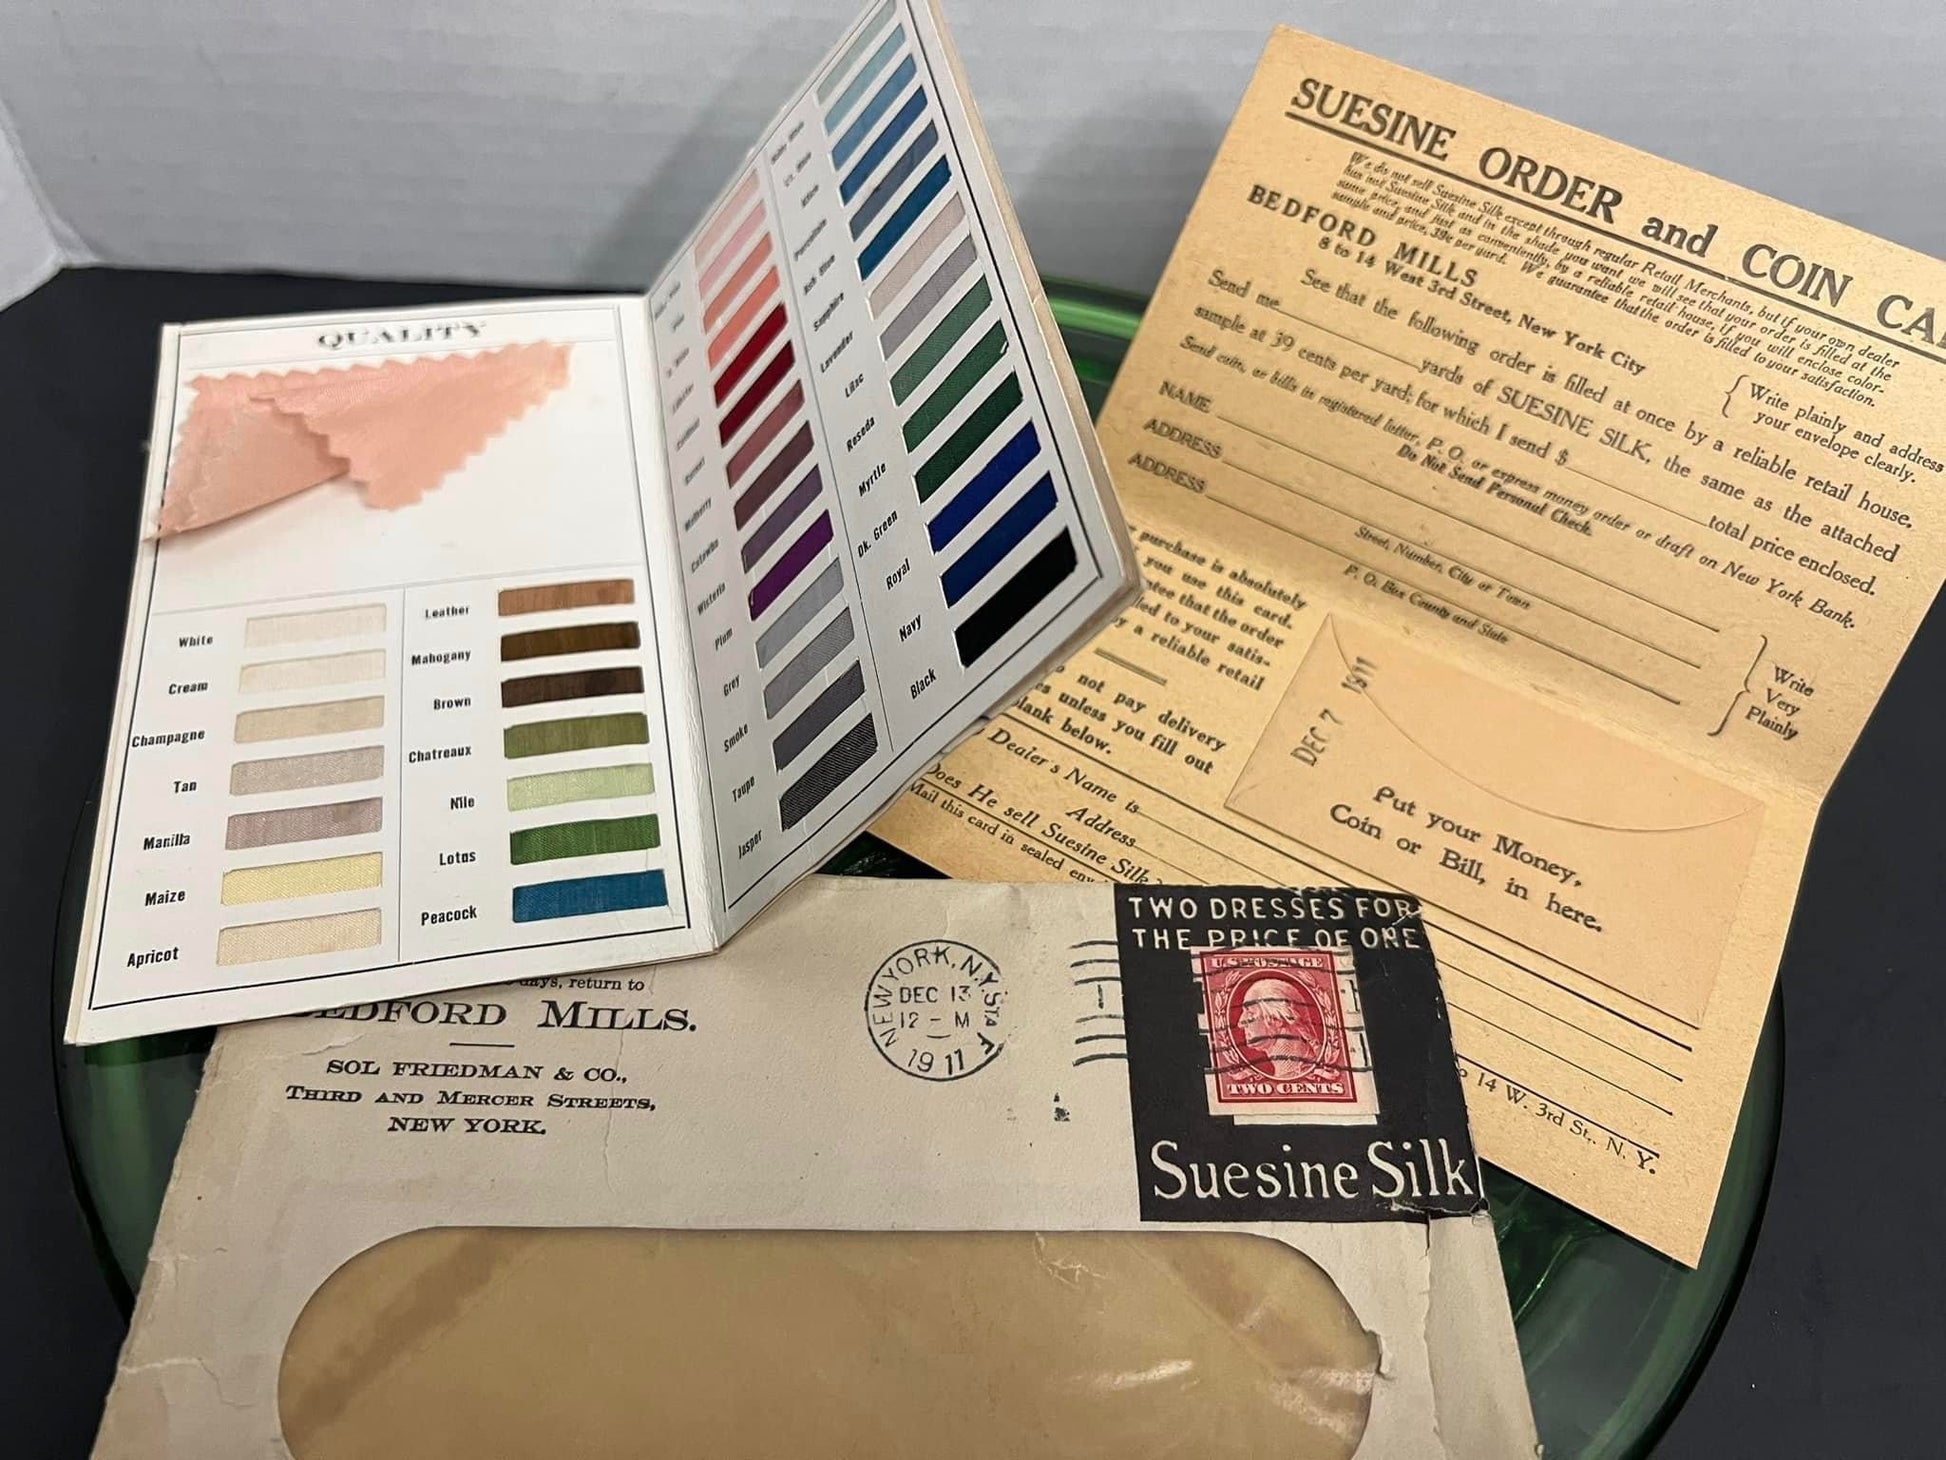 Antique advertising 1911 Small fabric sample advertising mailer Suesine silk - Bedford mills New York